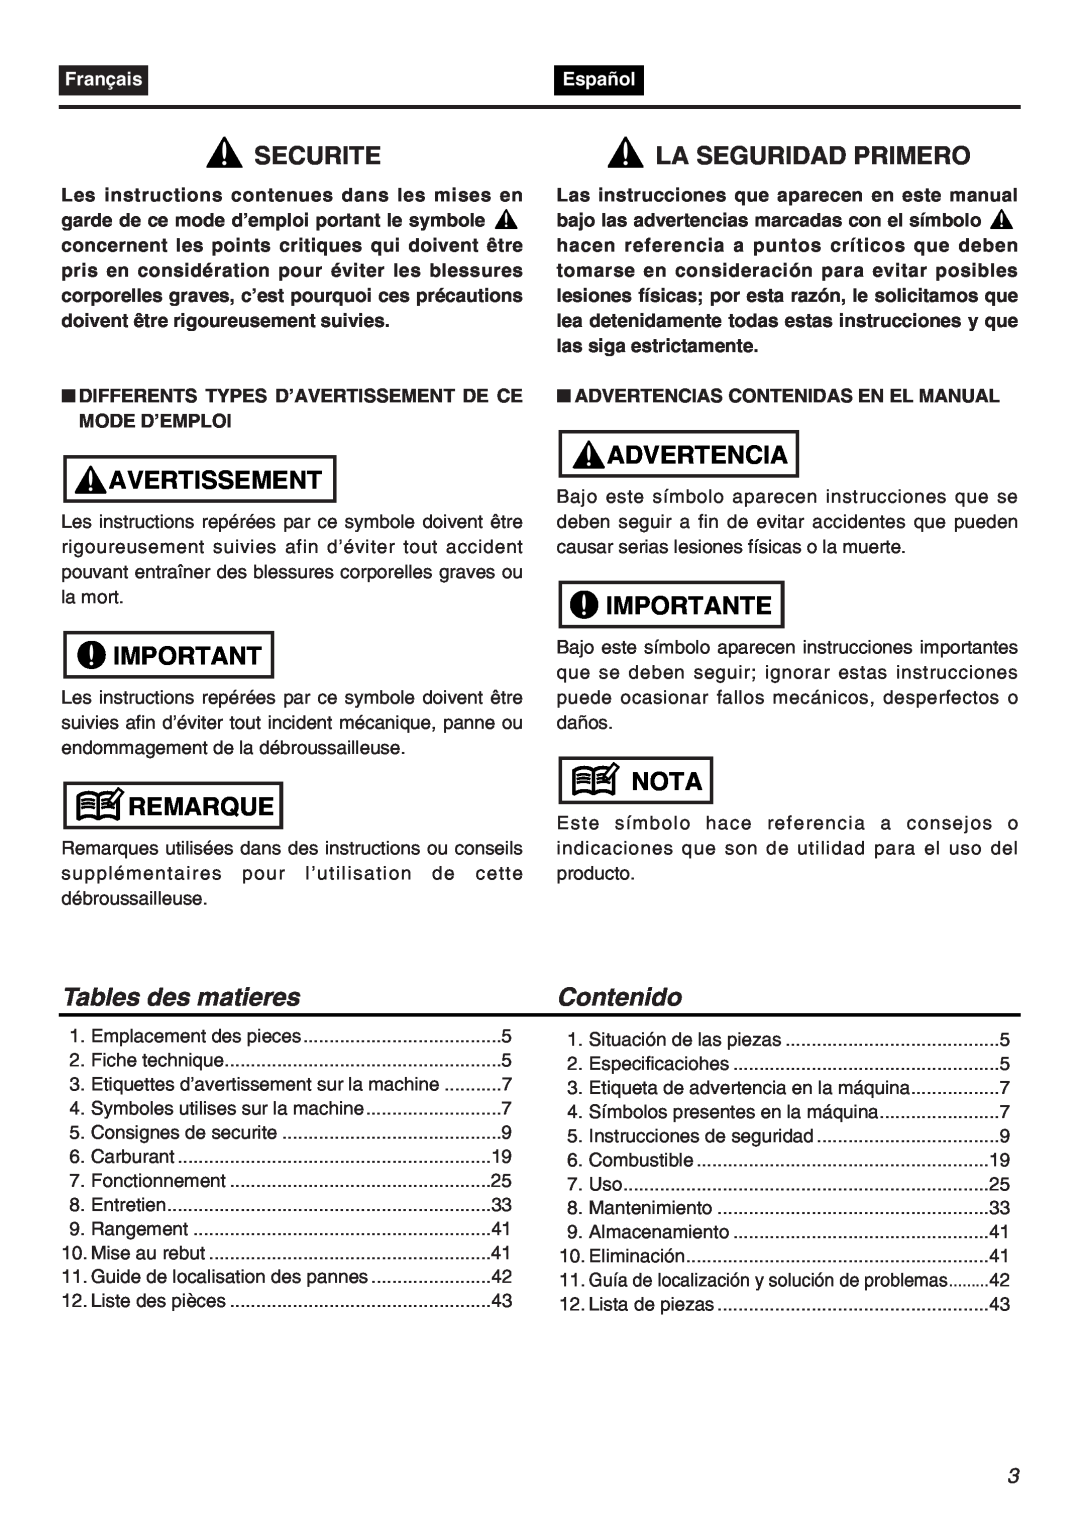 RedMax CHTZ2401L-CA manual Securite, Avertissement, Remarque, Advertencia, Importante, Nota, Tables des matieres, Contenido 